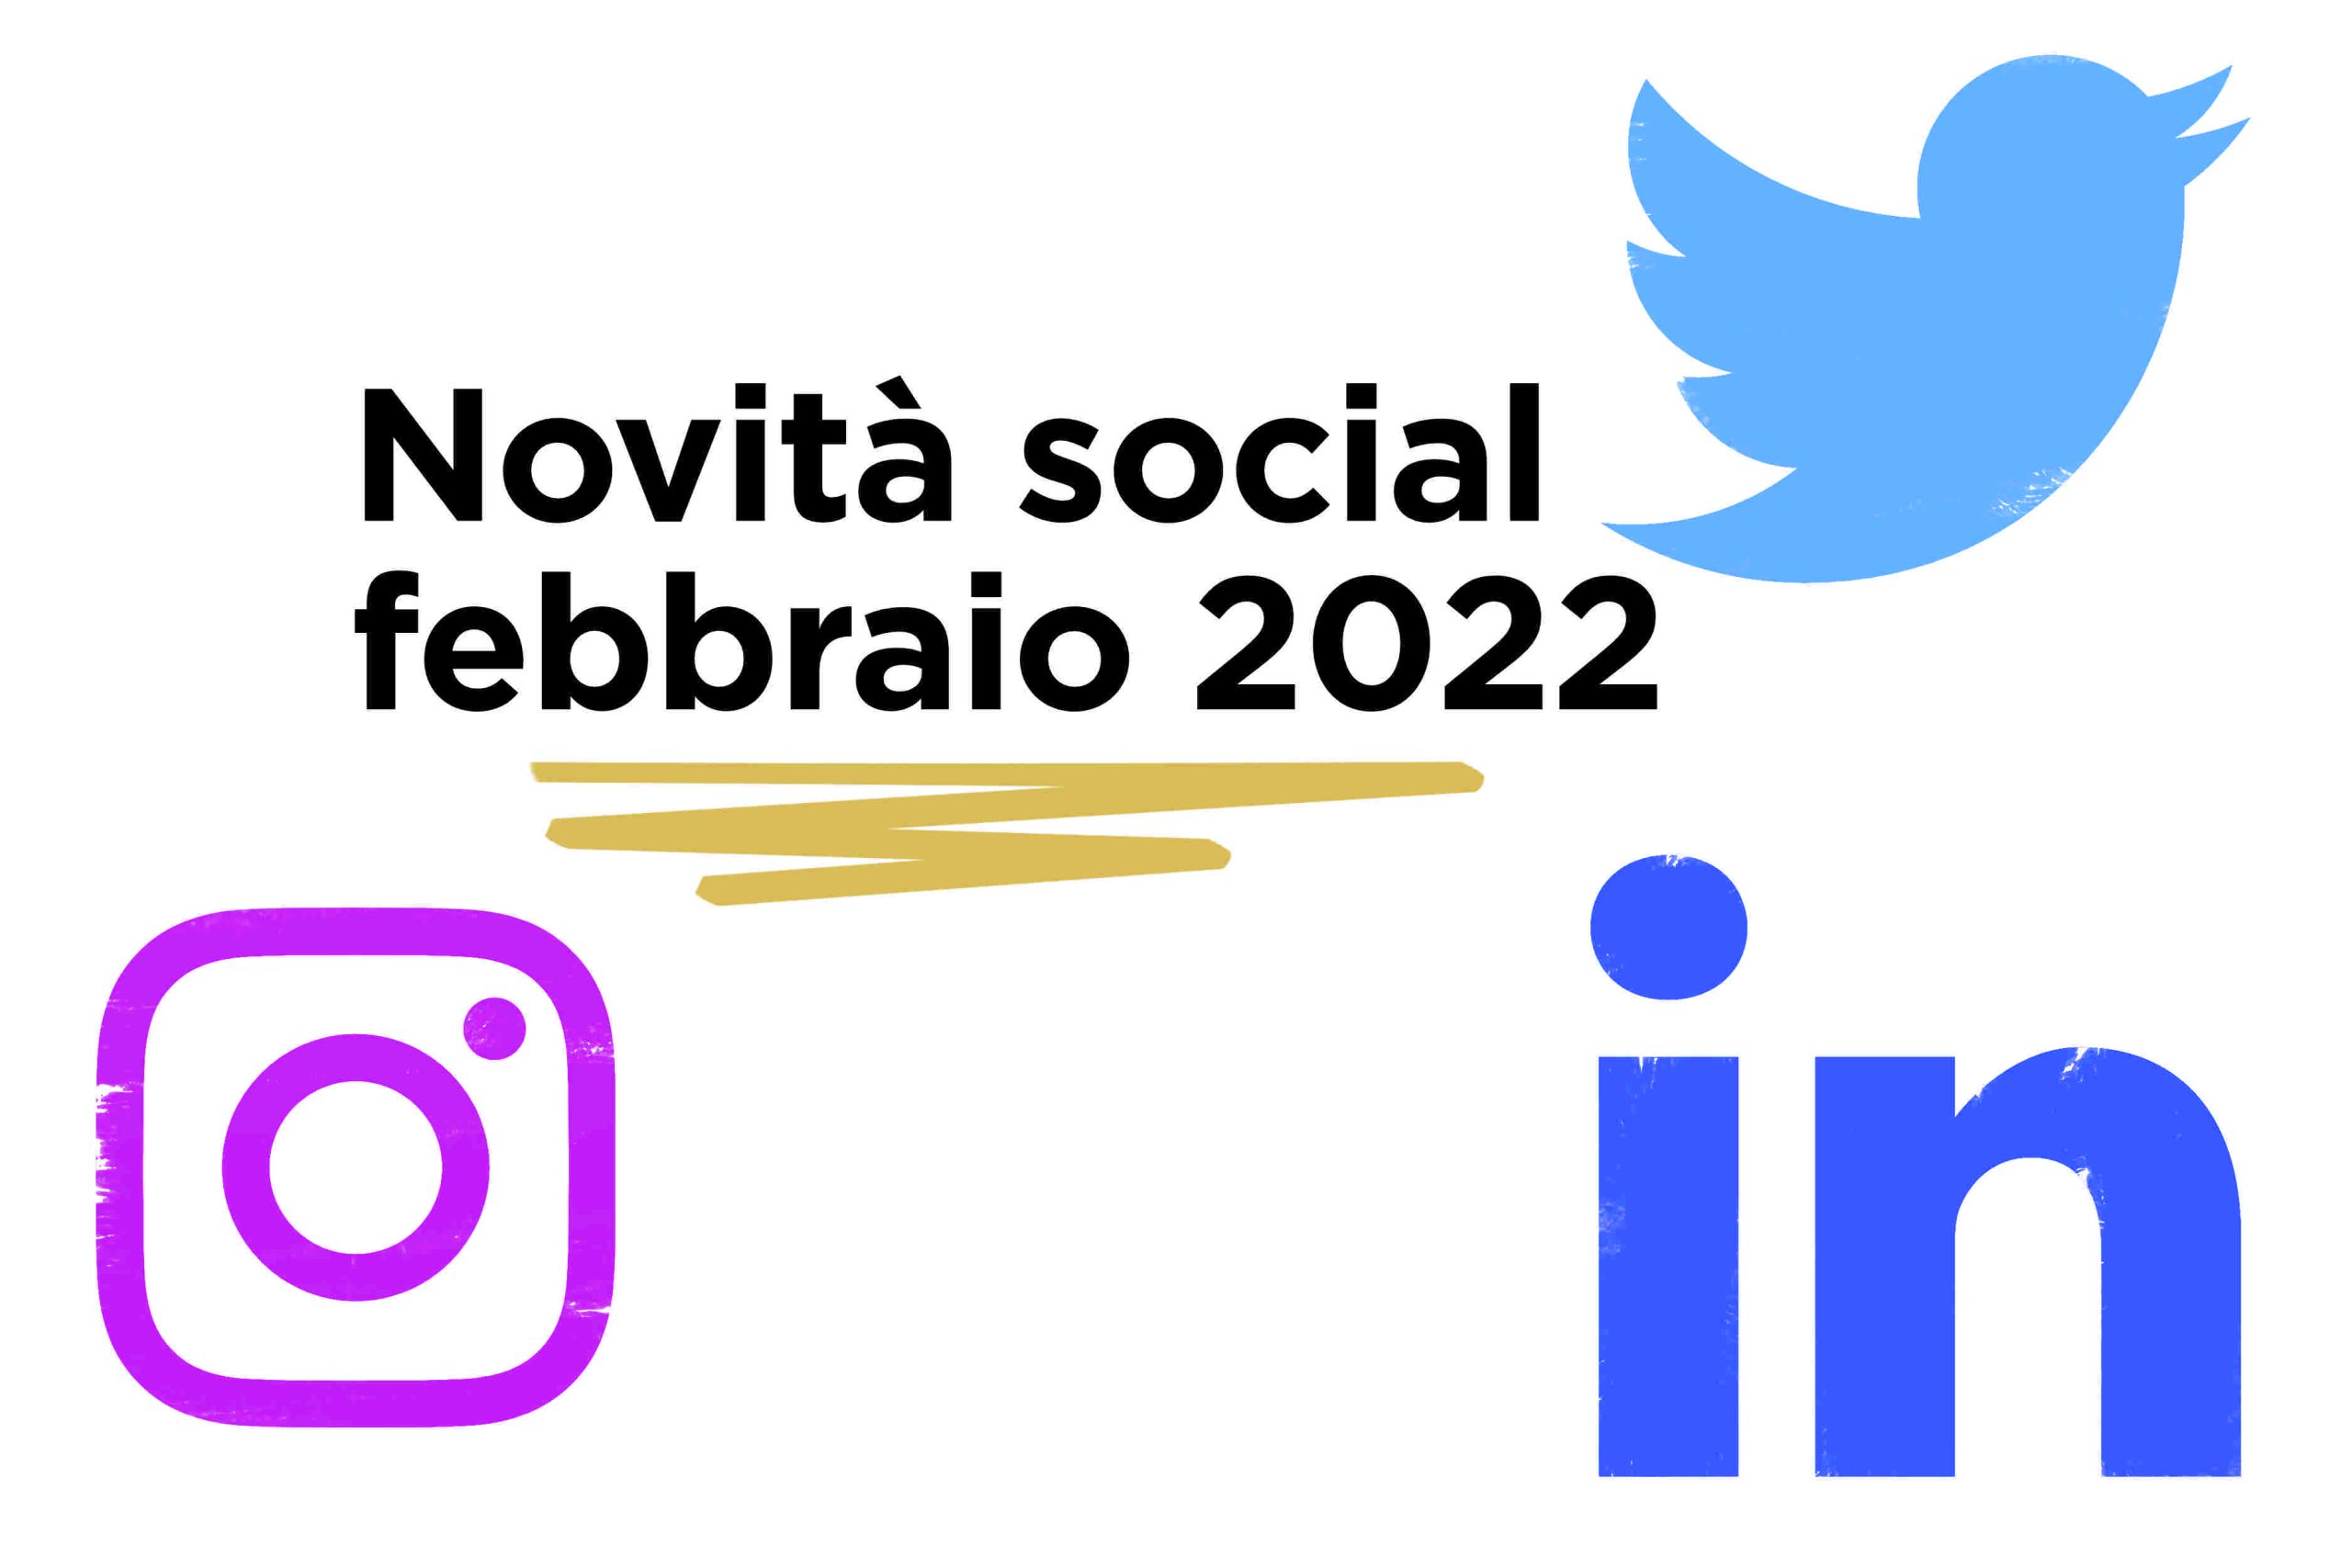 Novità social febbraio 2022